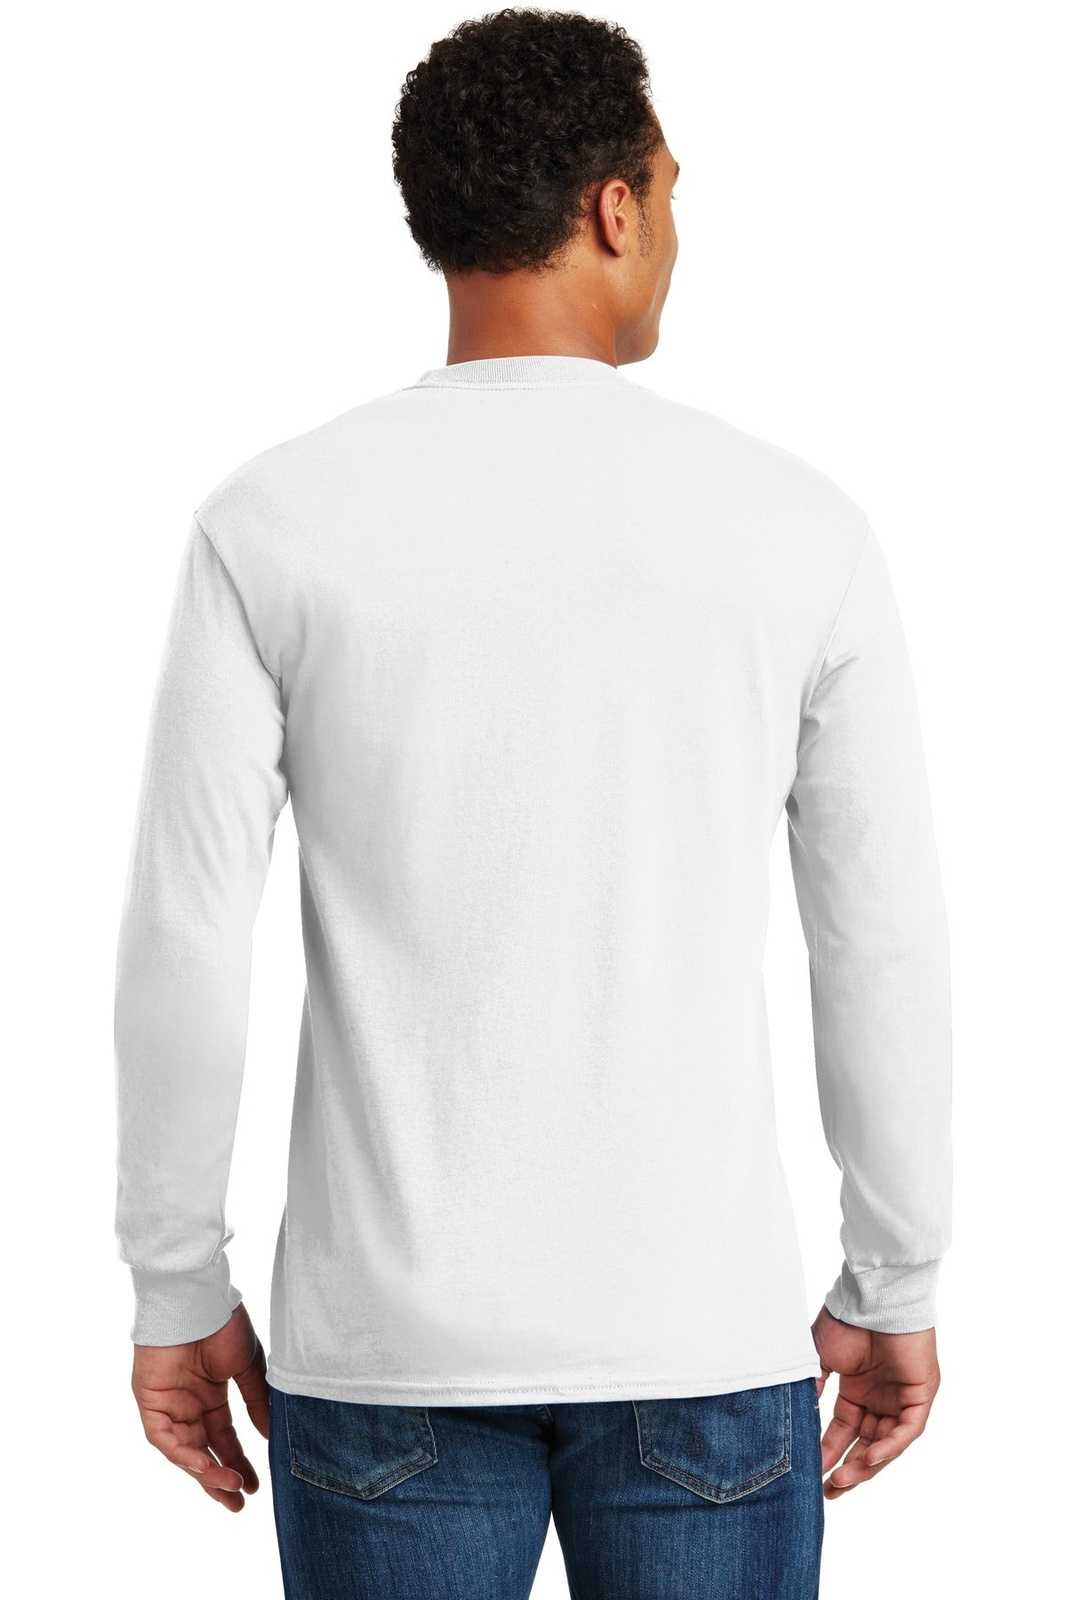 Gildan 5400 Heavy Cotton 100% Cotton Long T-Shirt White